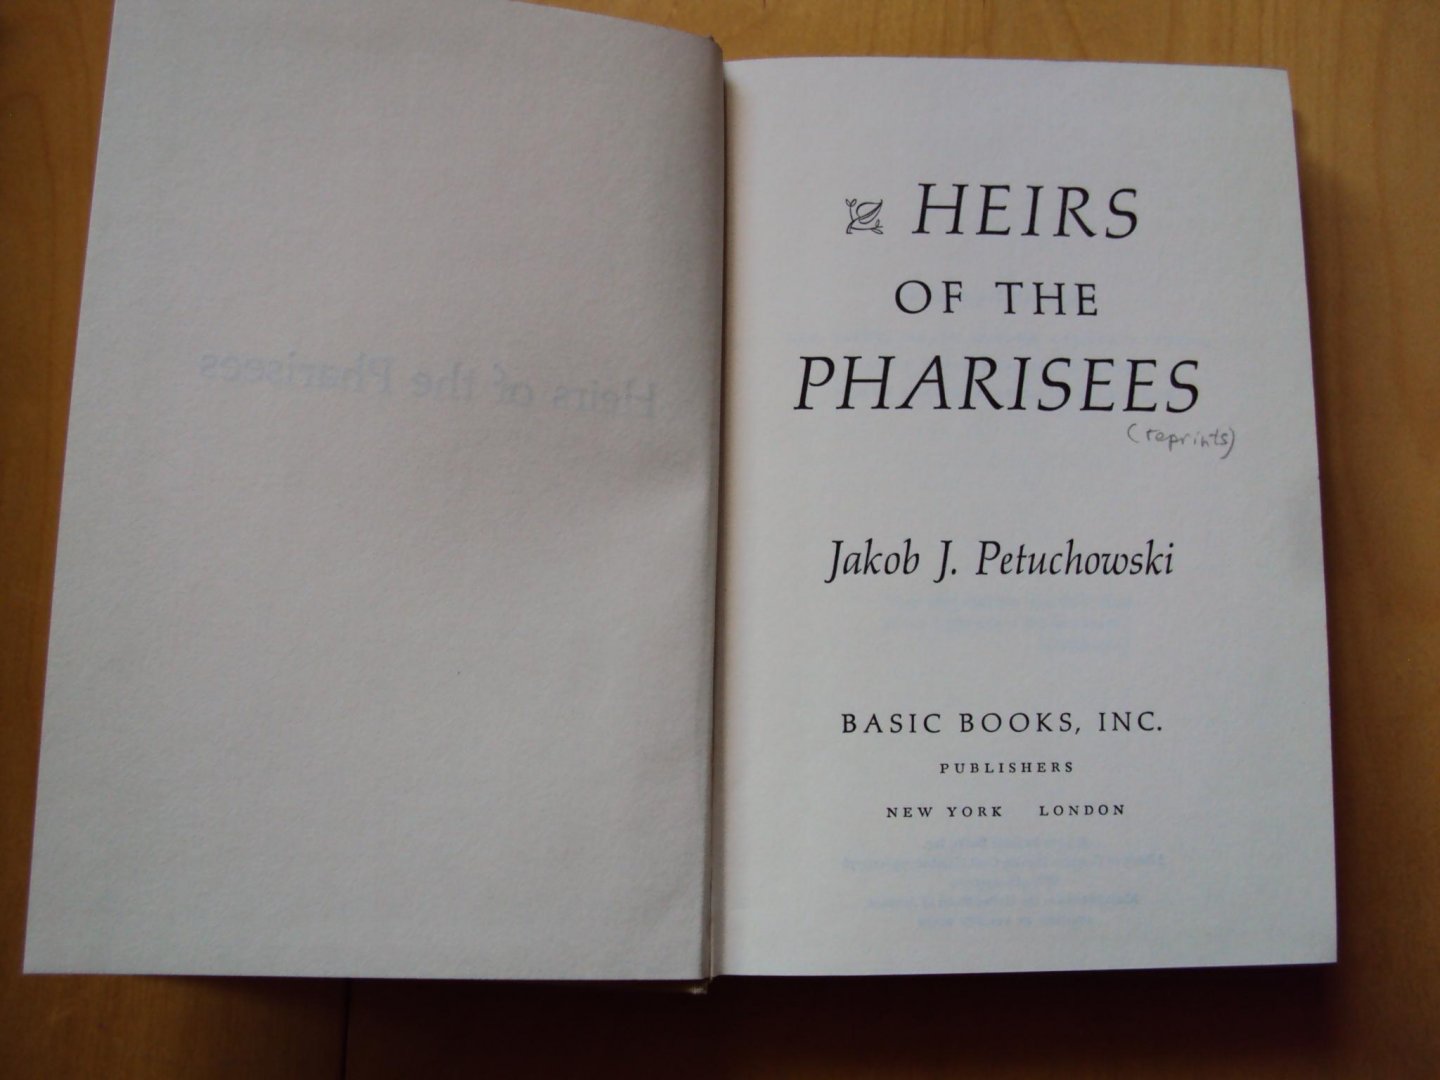 Petuchowski, Jakob J. - Heirs of the Pharisees